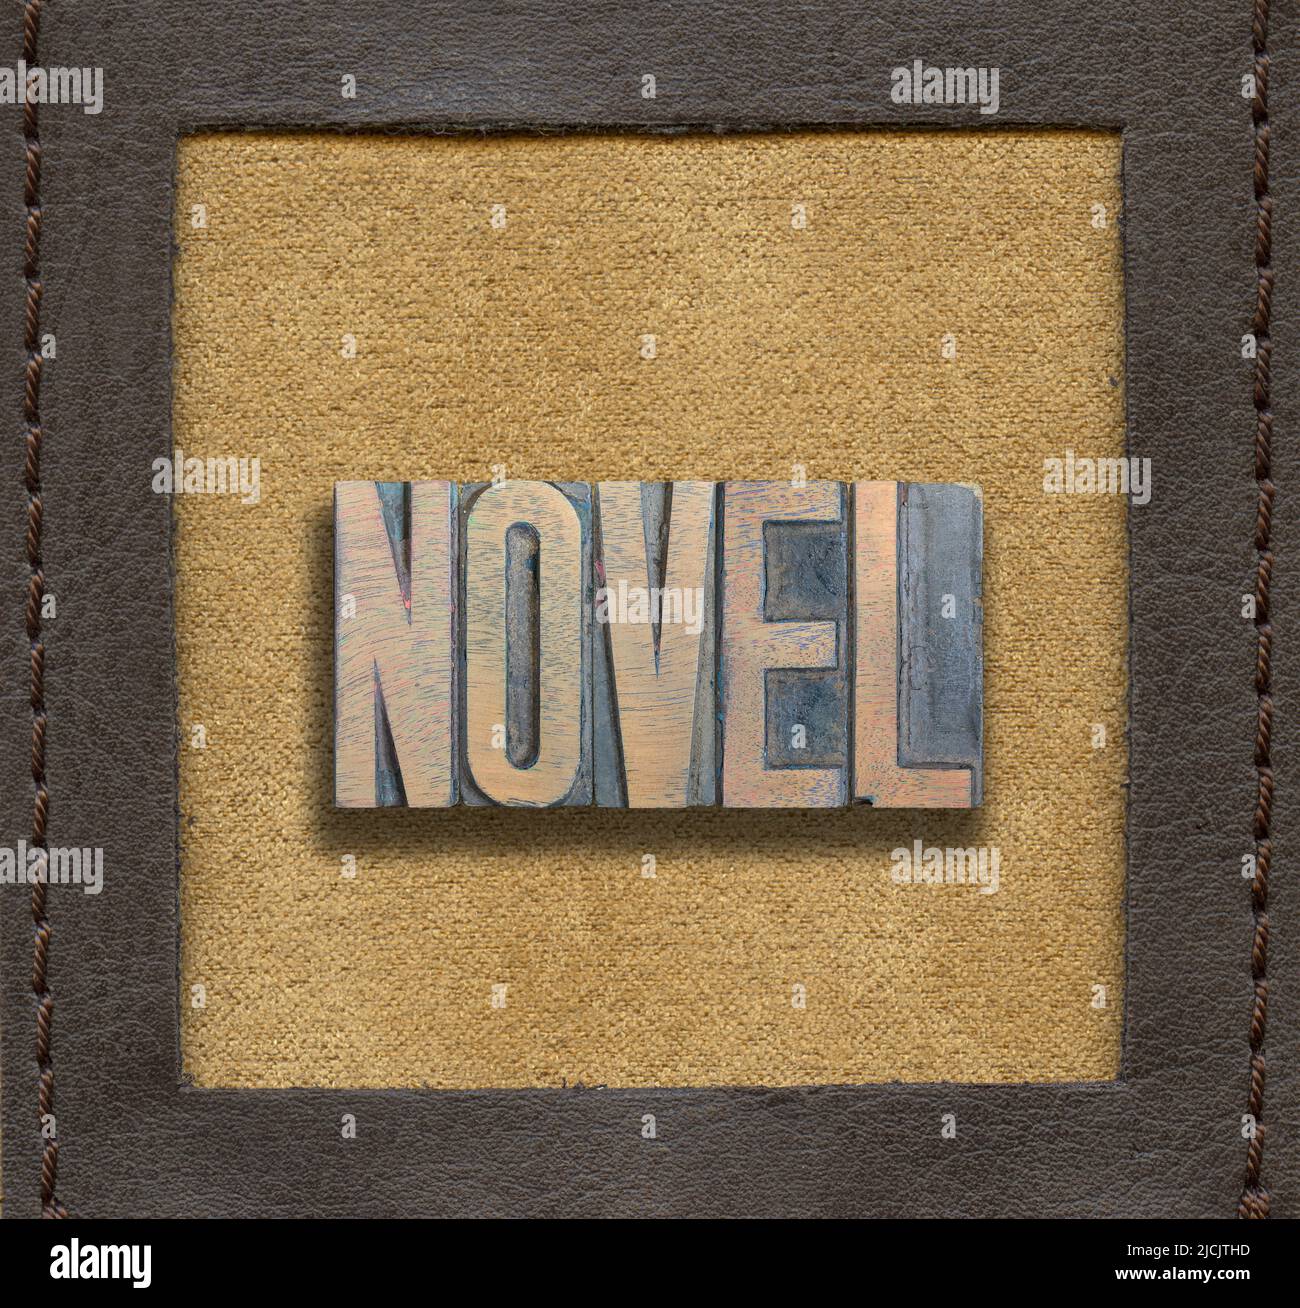 novel word assembled from vintage wooden letterpress inside stitched leather frame Stock Photo